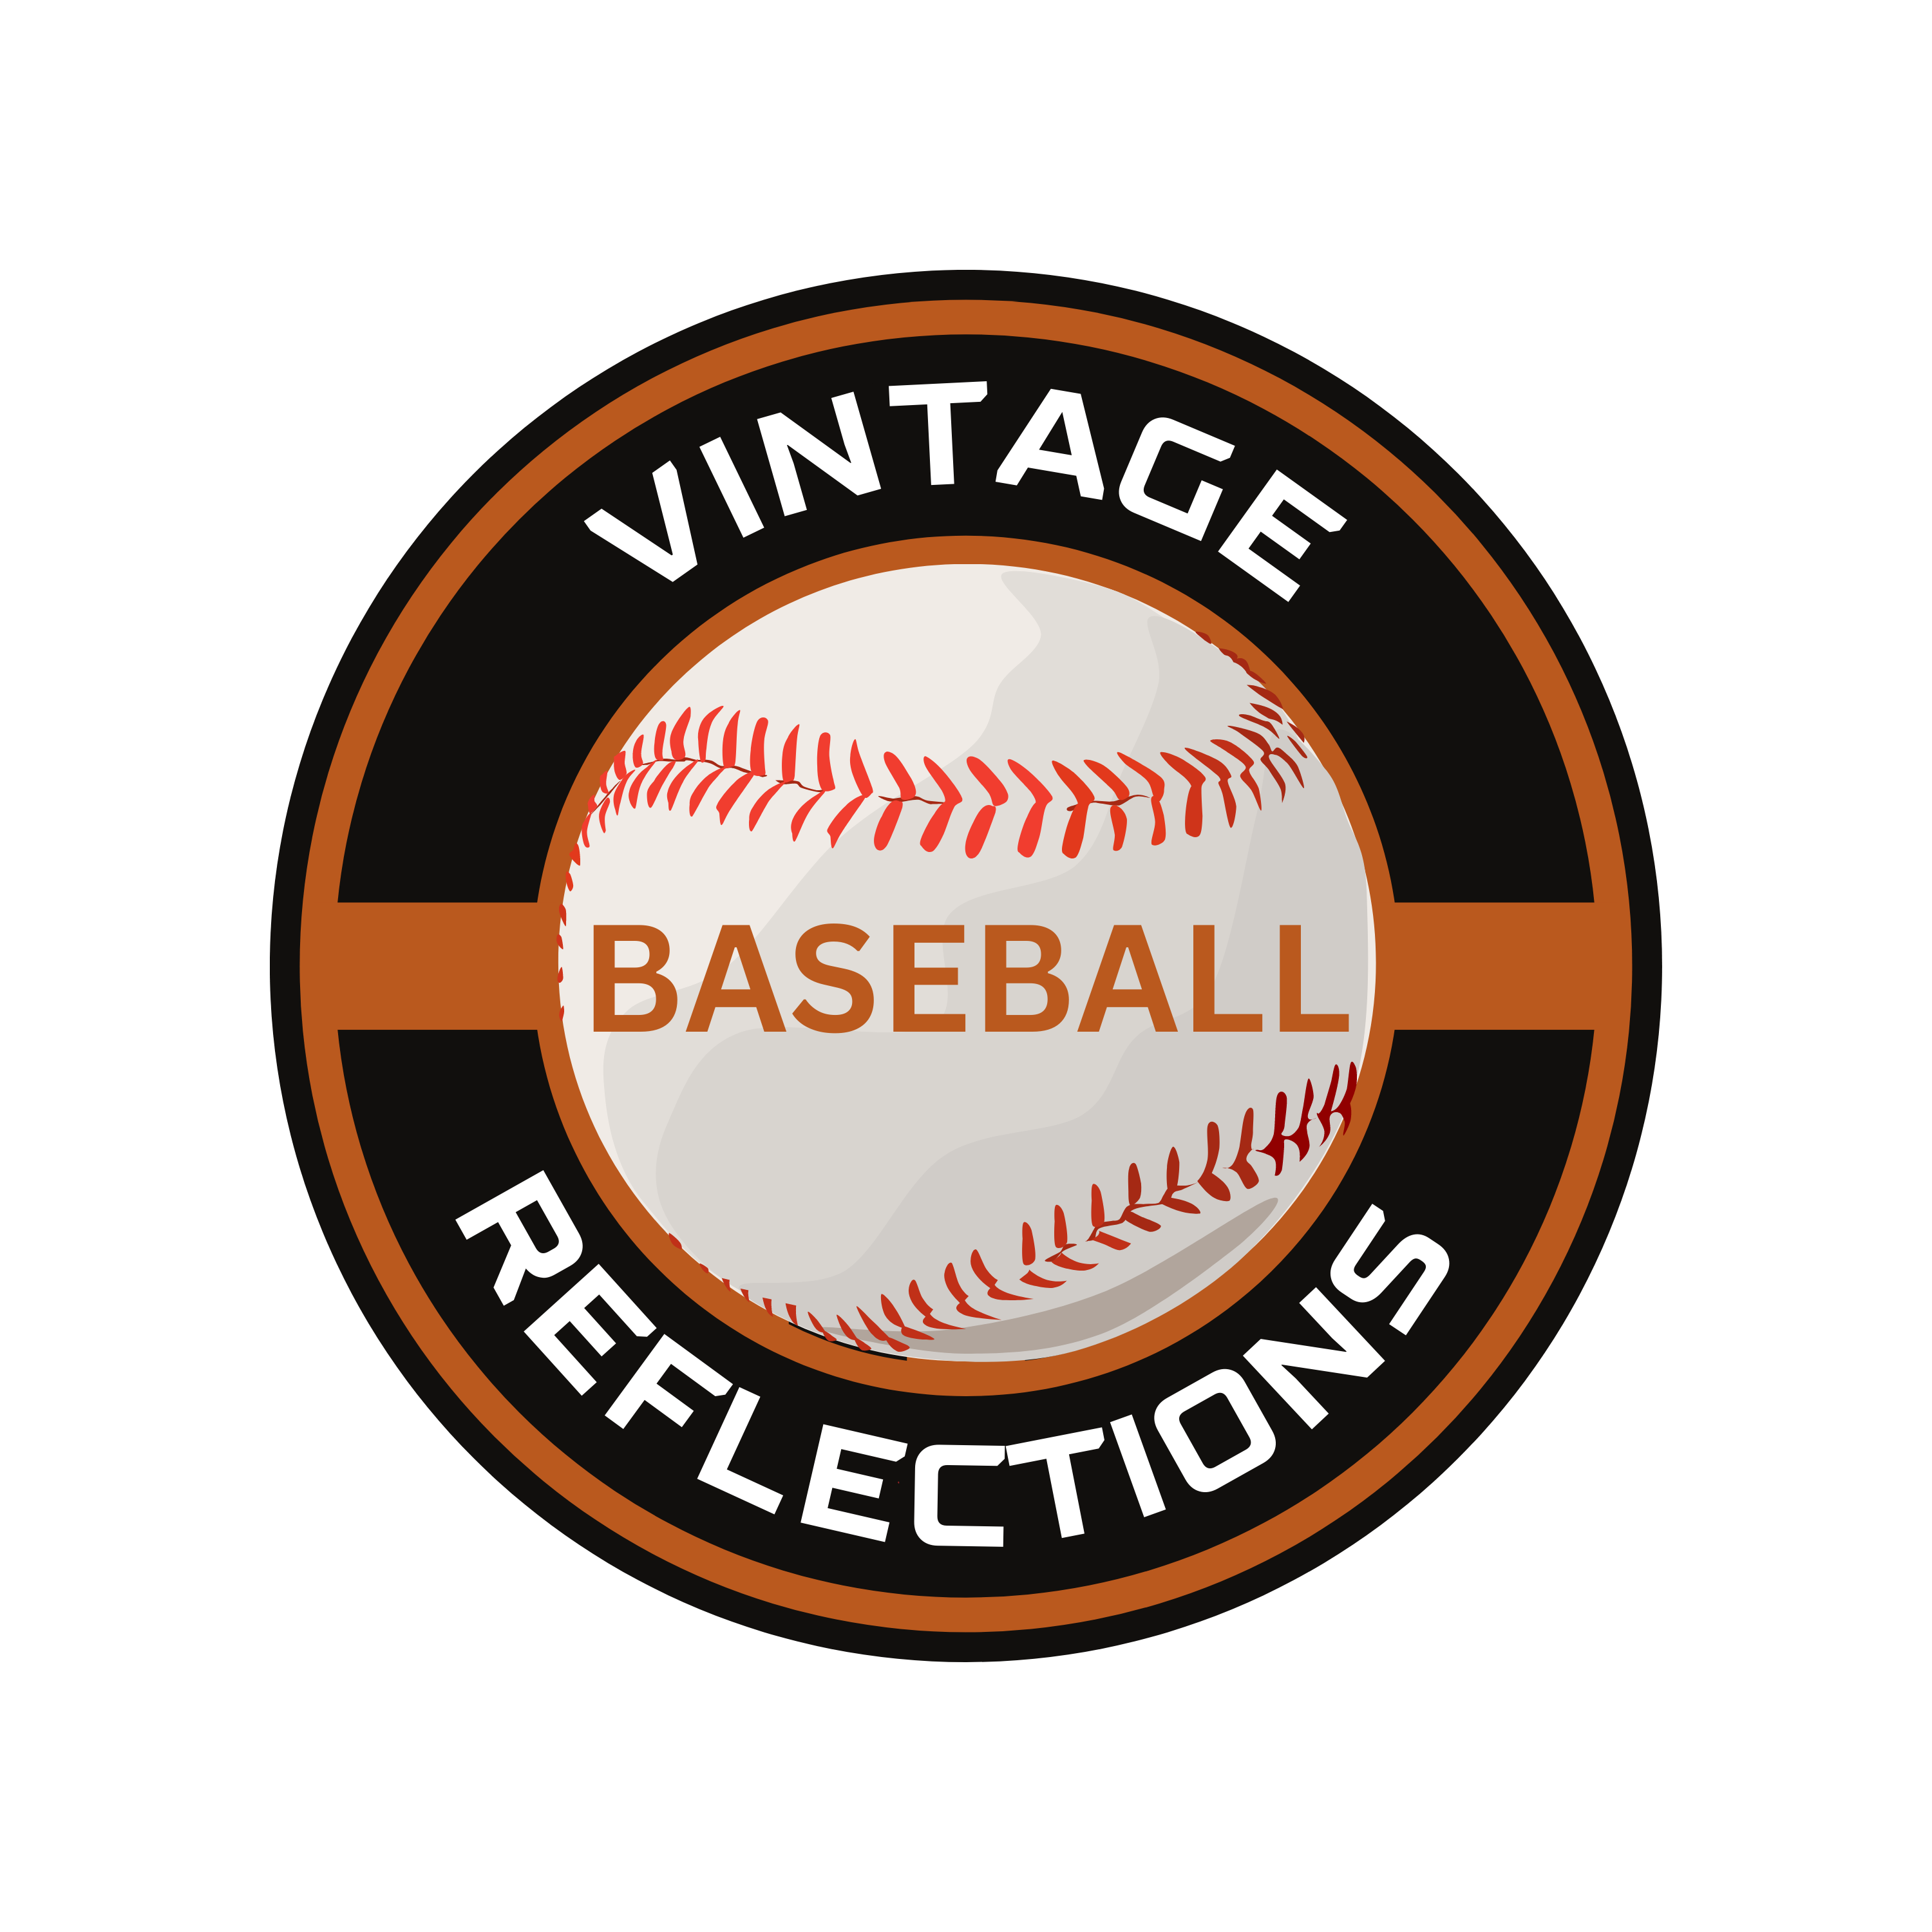 July 16 - Joe DiMaggio extend his streak to 56 games - Vintage Baseball Reflections